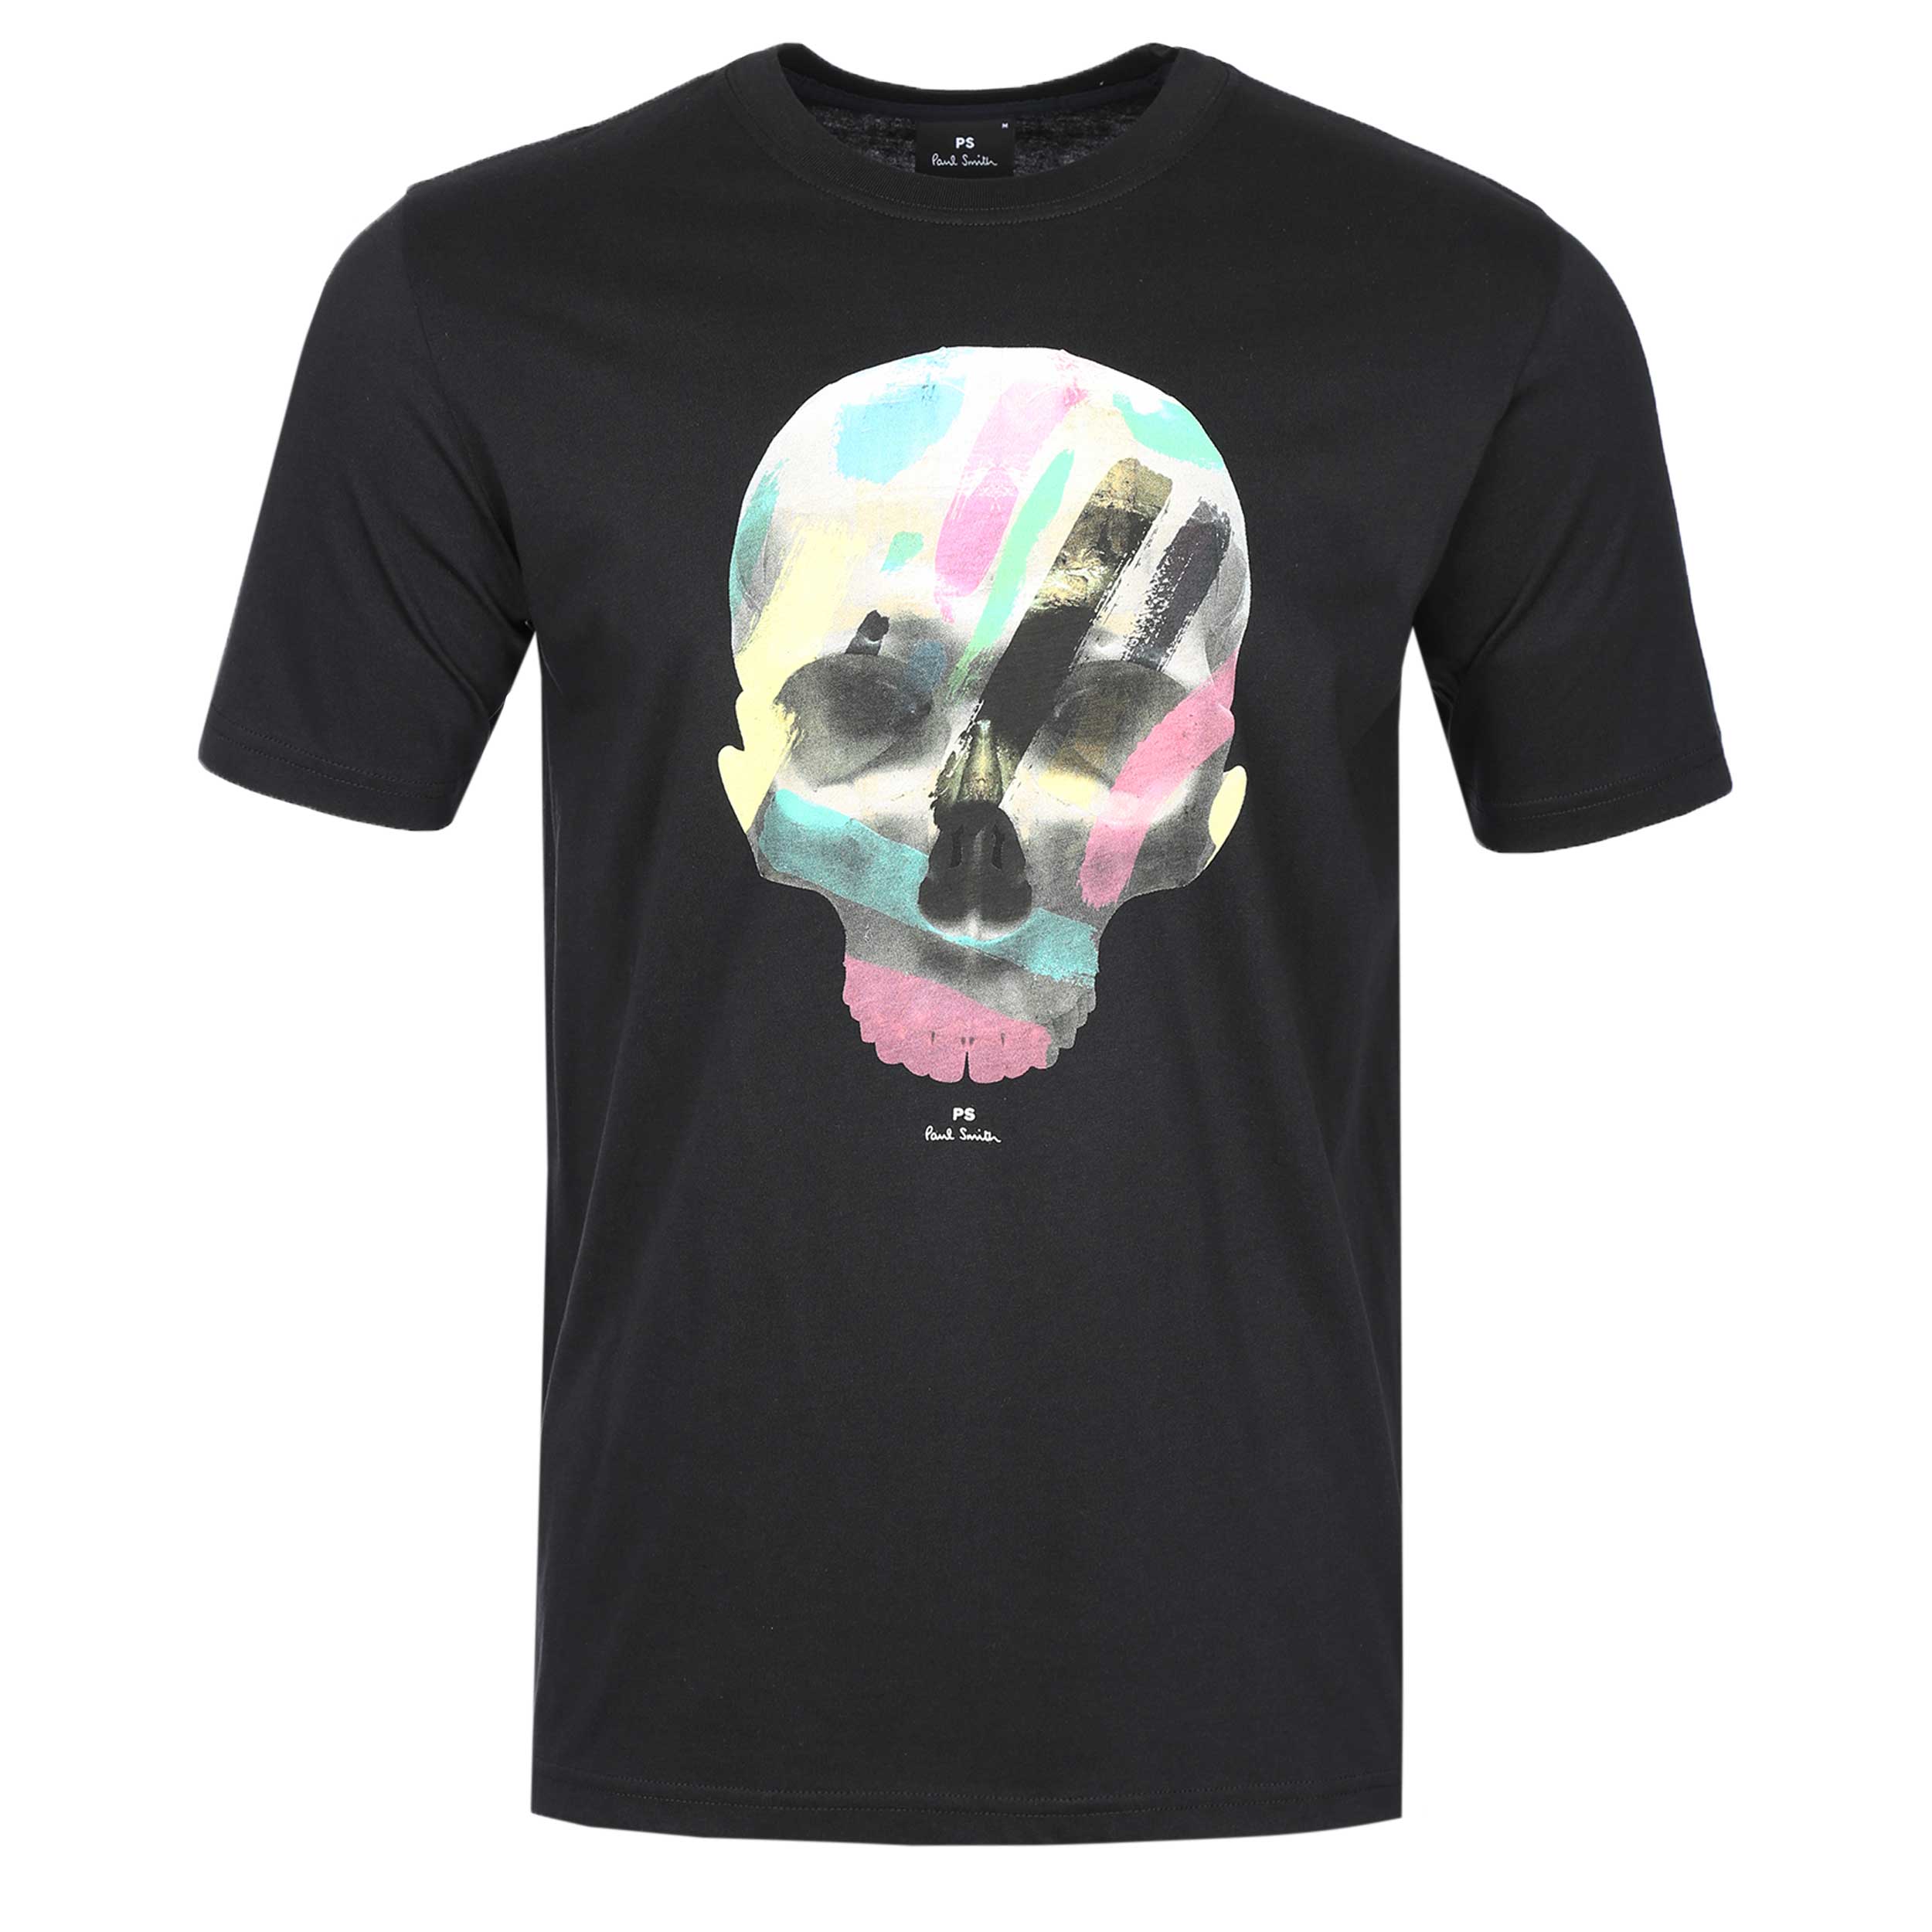 Paul Smith Skull T Shirt in Black | Paul Smith | Norton Barrie